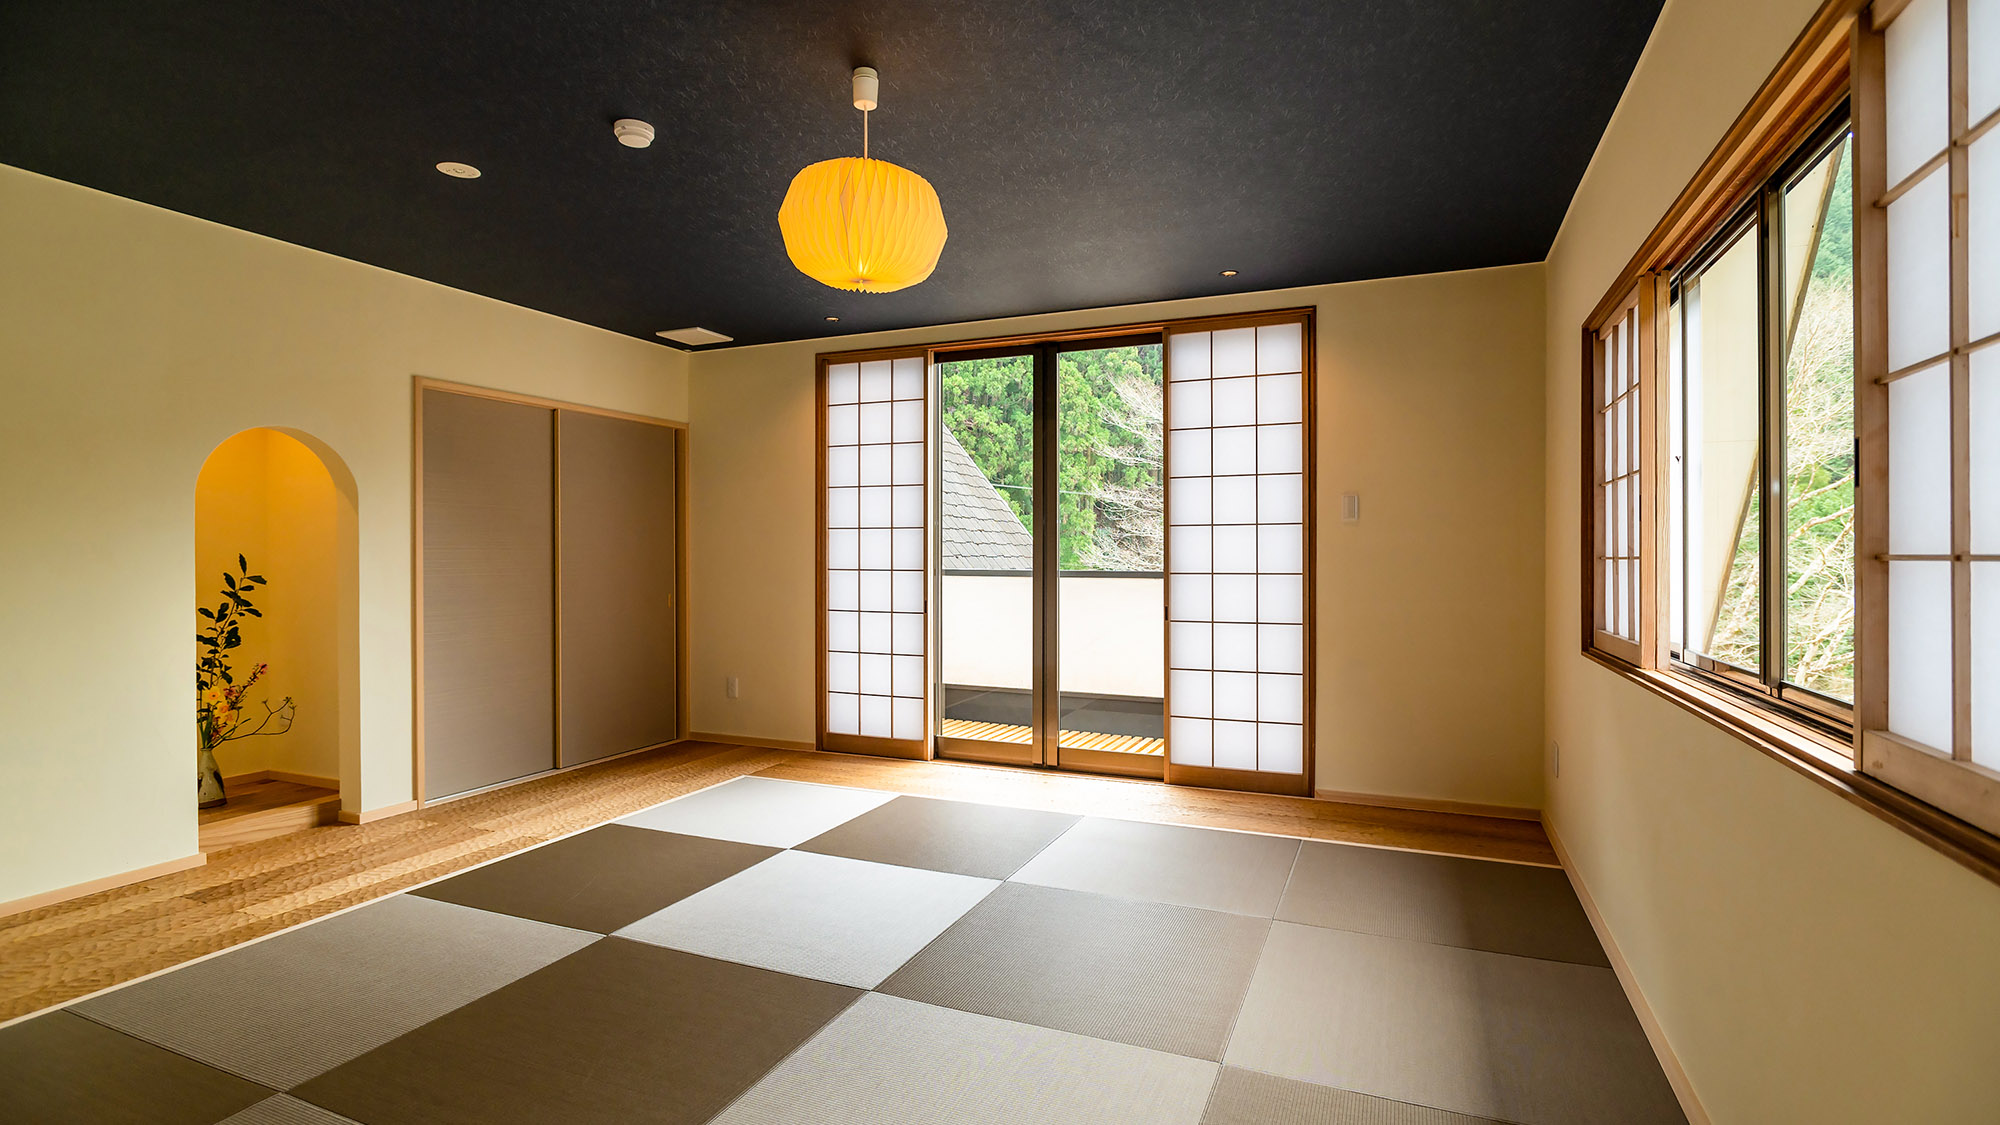 【Hoshiyama】畳の間でのんびりと寝転がり、足をのばしてゆっくりとお寛ぎください。